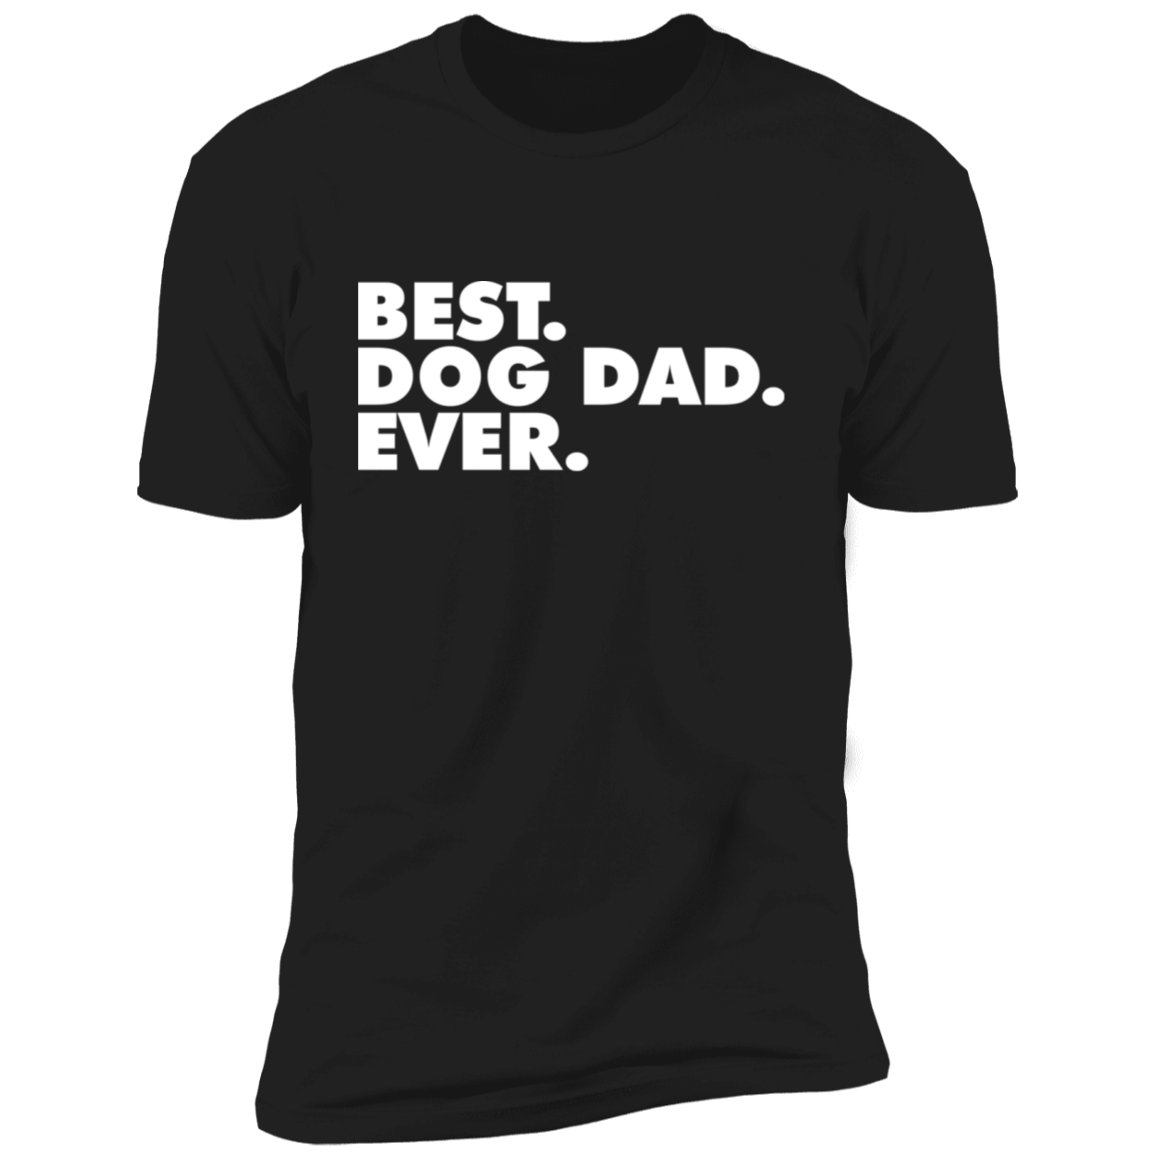 Best. Dog Dad. Ever.